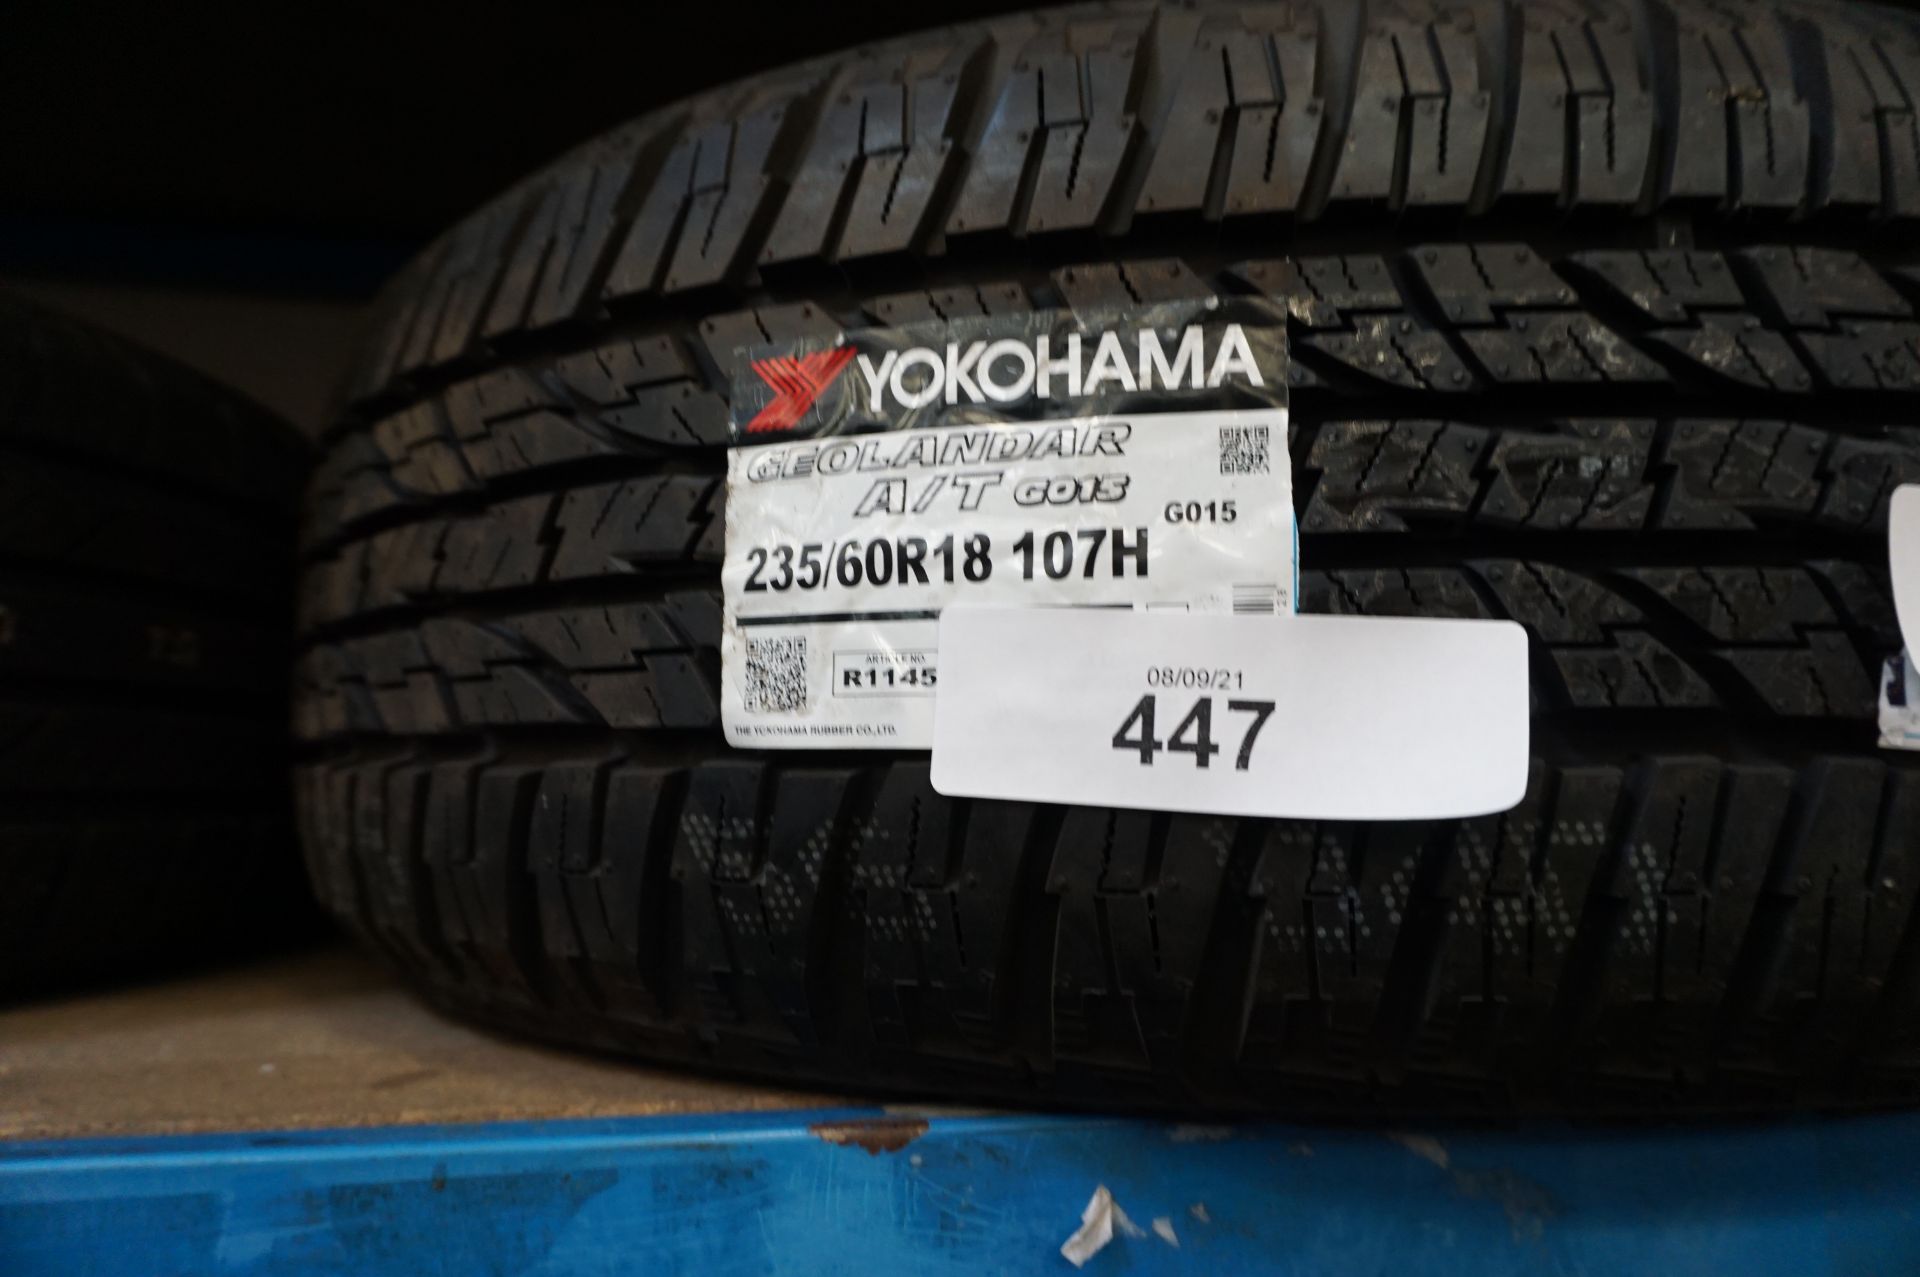 1 x Yokohama Geolander A/T tyre, 235/60 R 18 - New (GS12)